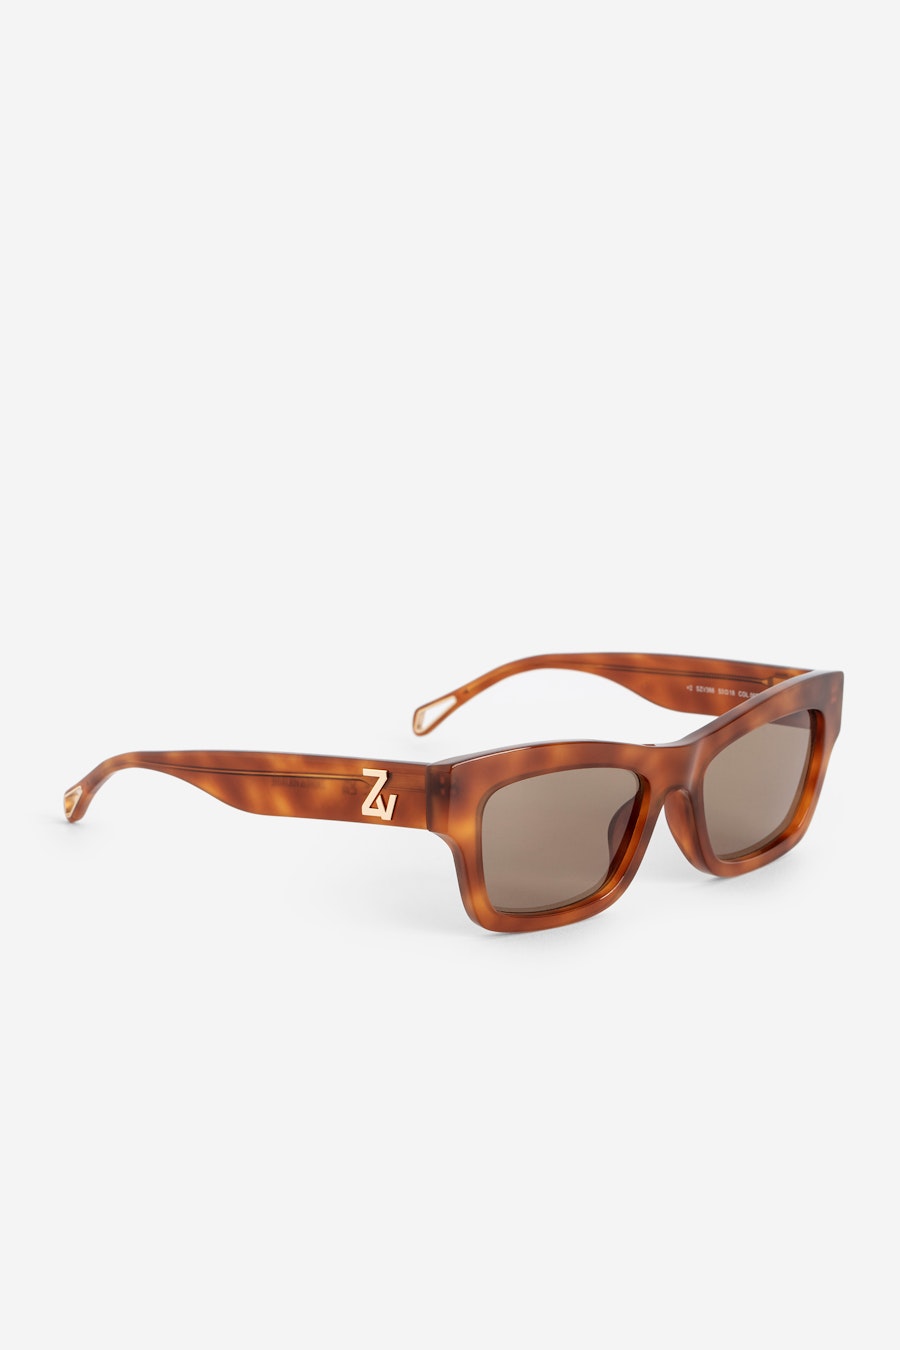 ZADIG&VOLTAIRE ZV23H1 Sunglasses